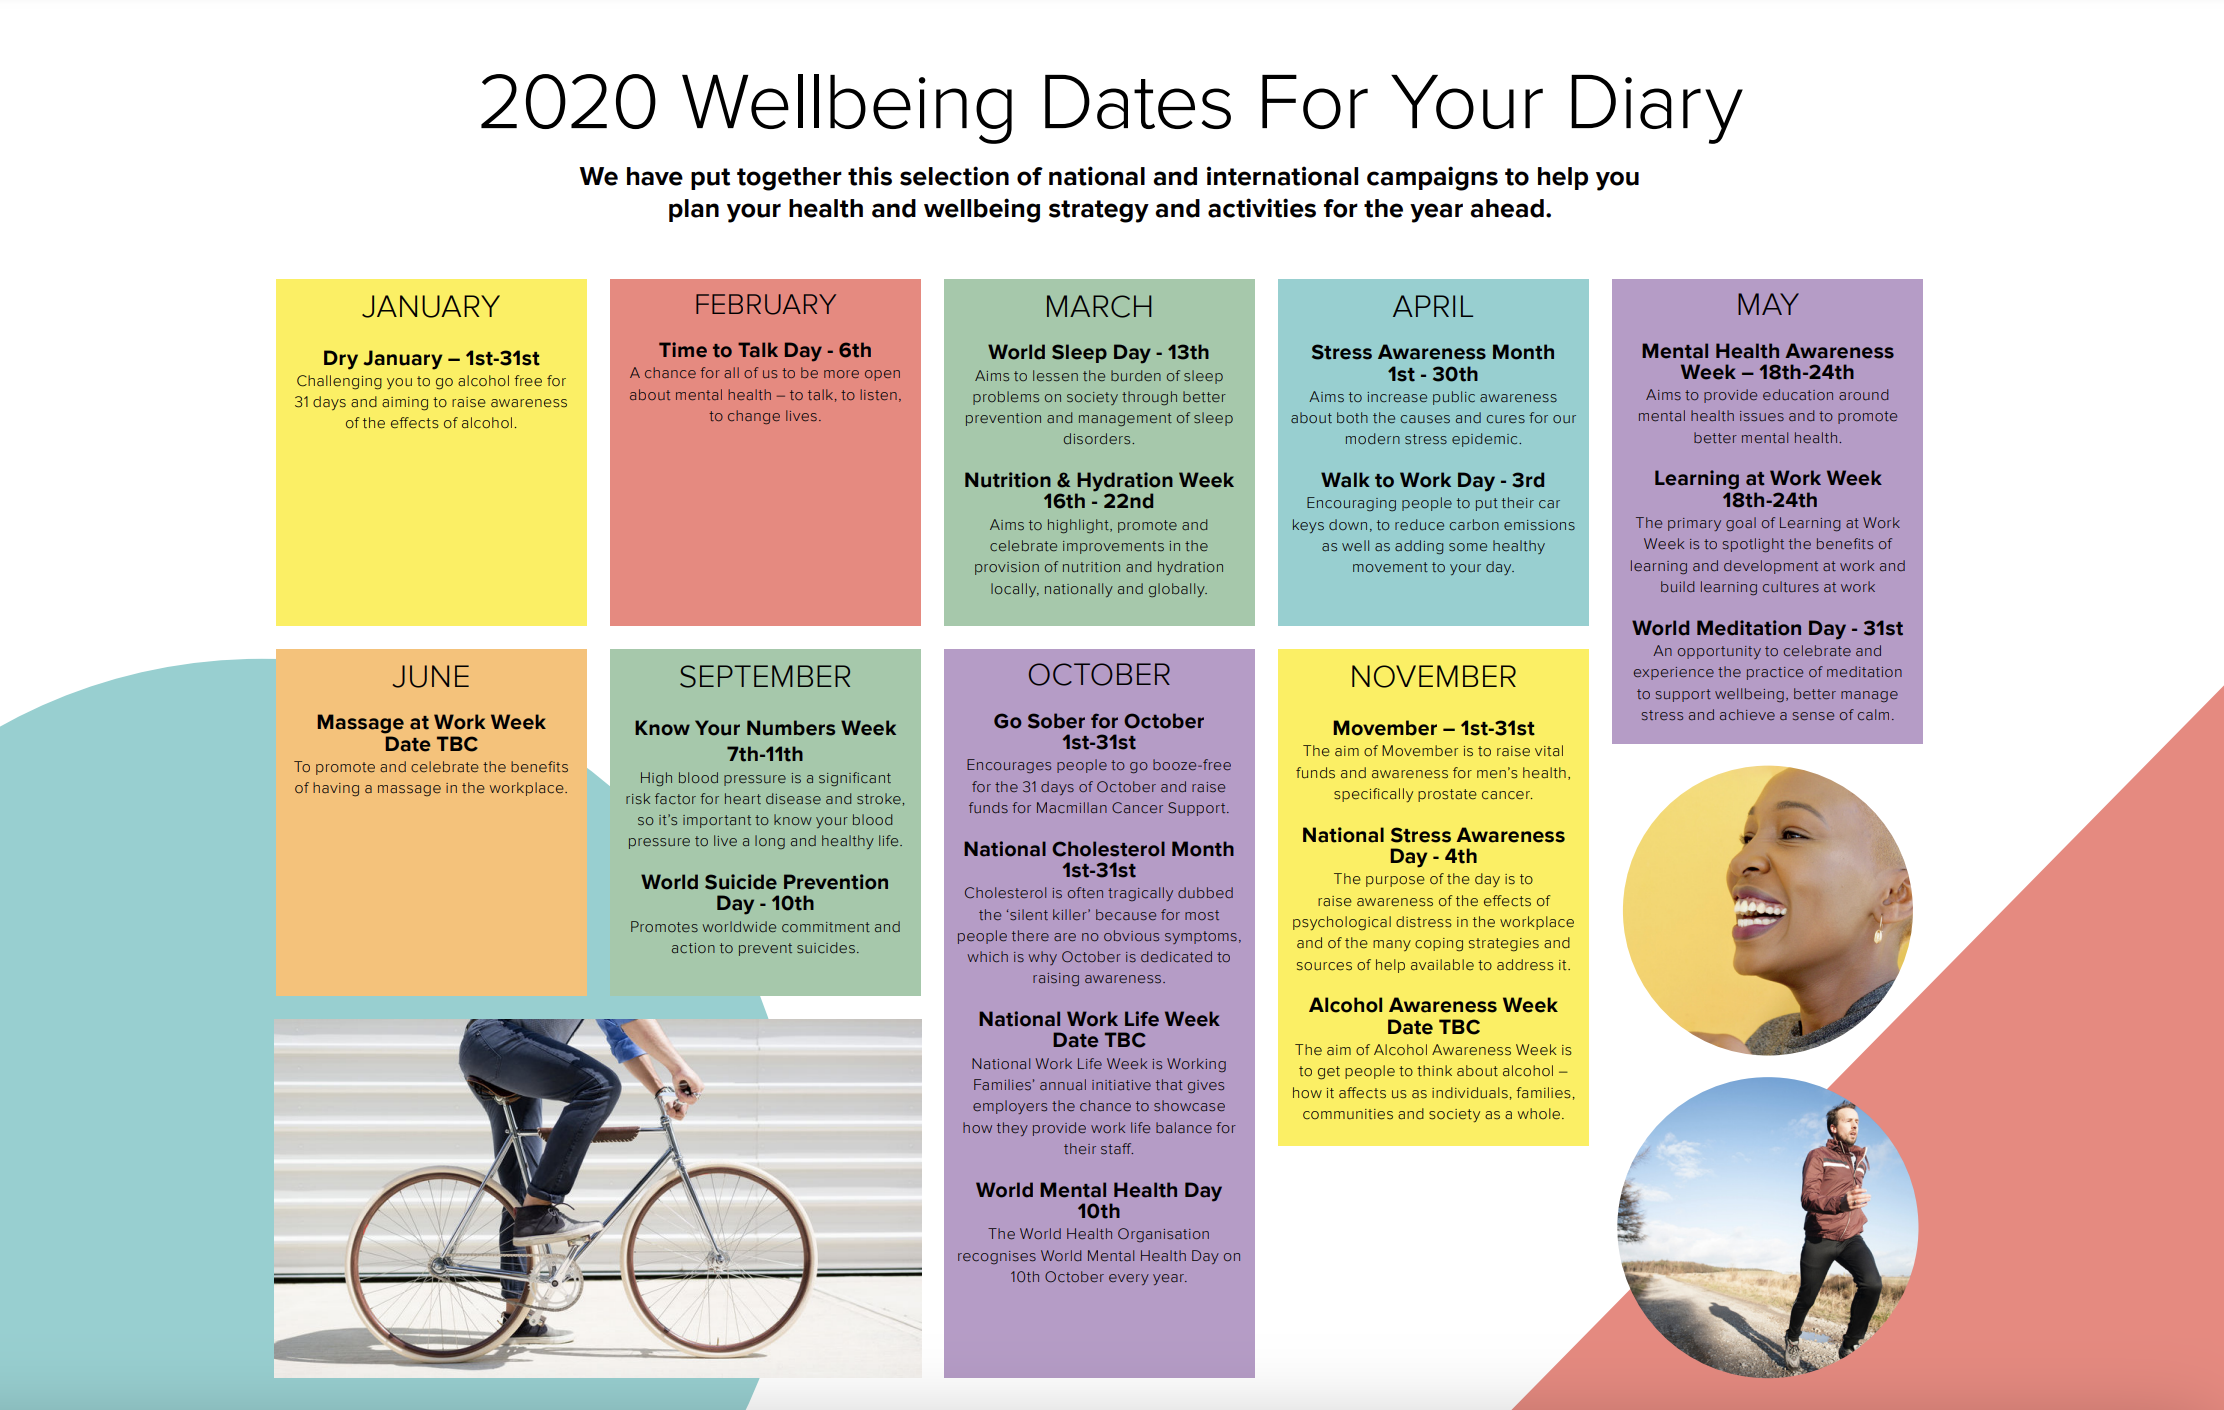 2020-wellbeing-calendar-key-employee-health-and-wellbeing-days-work